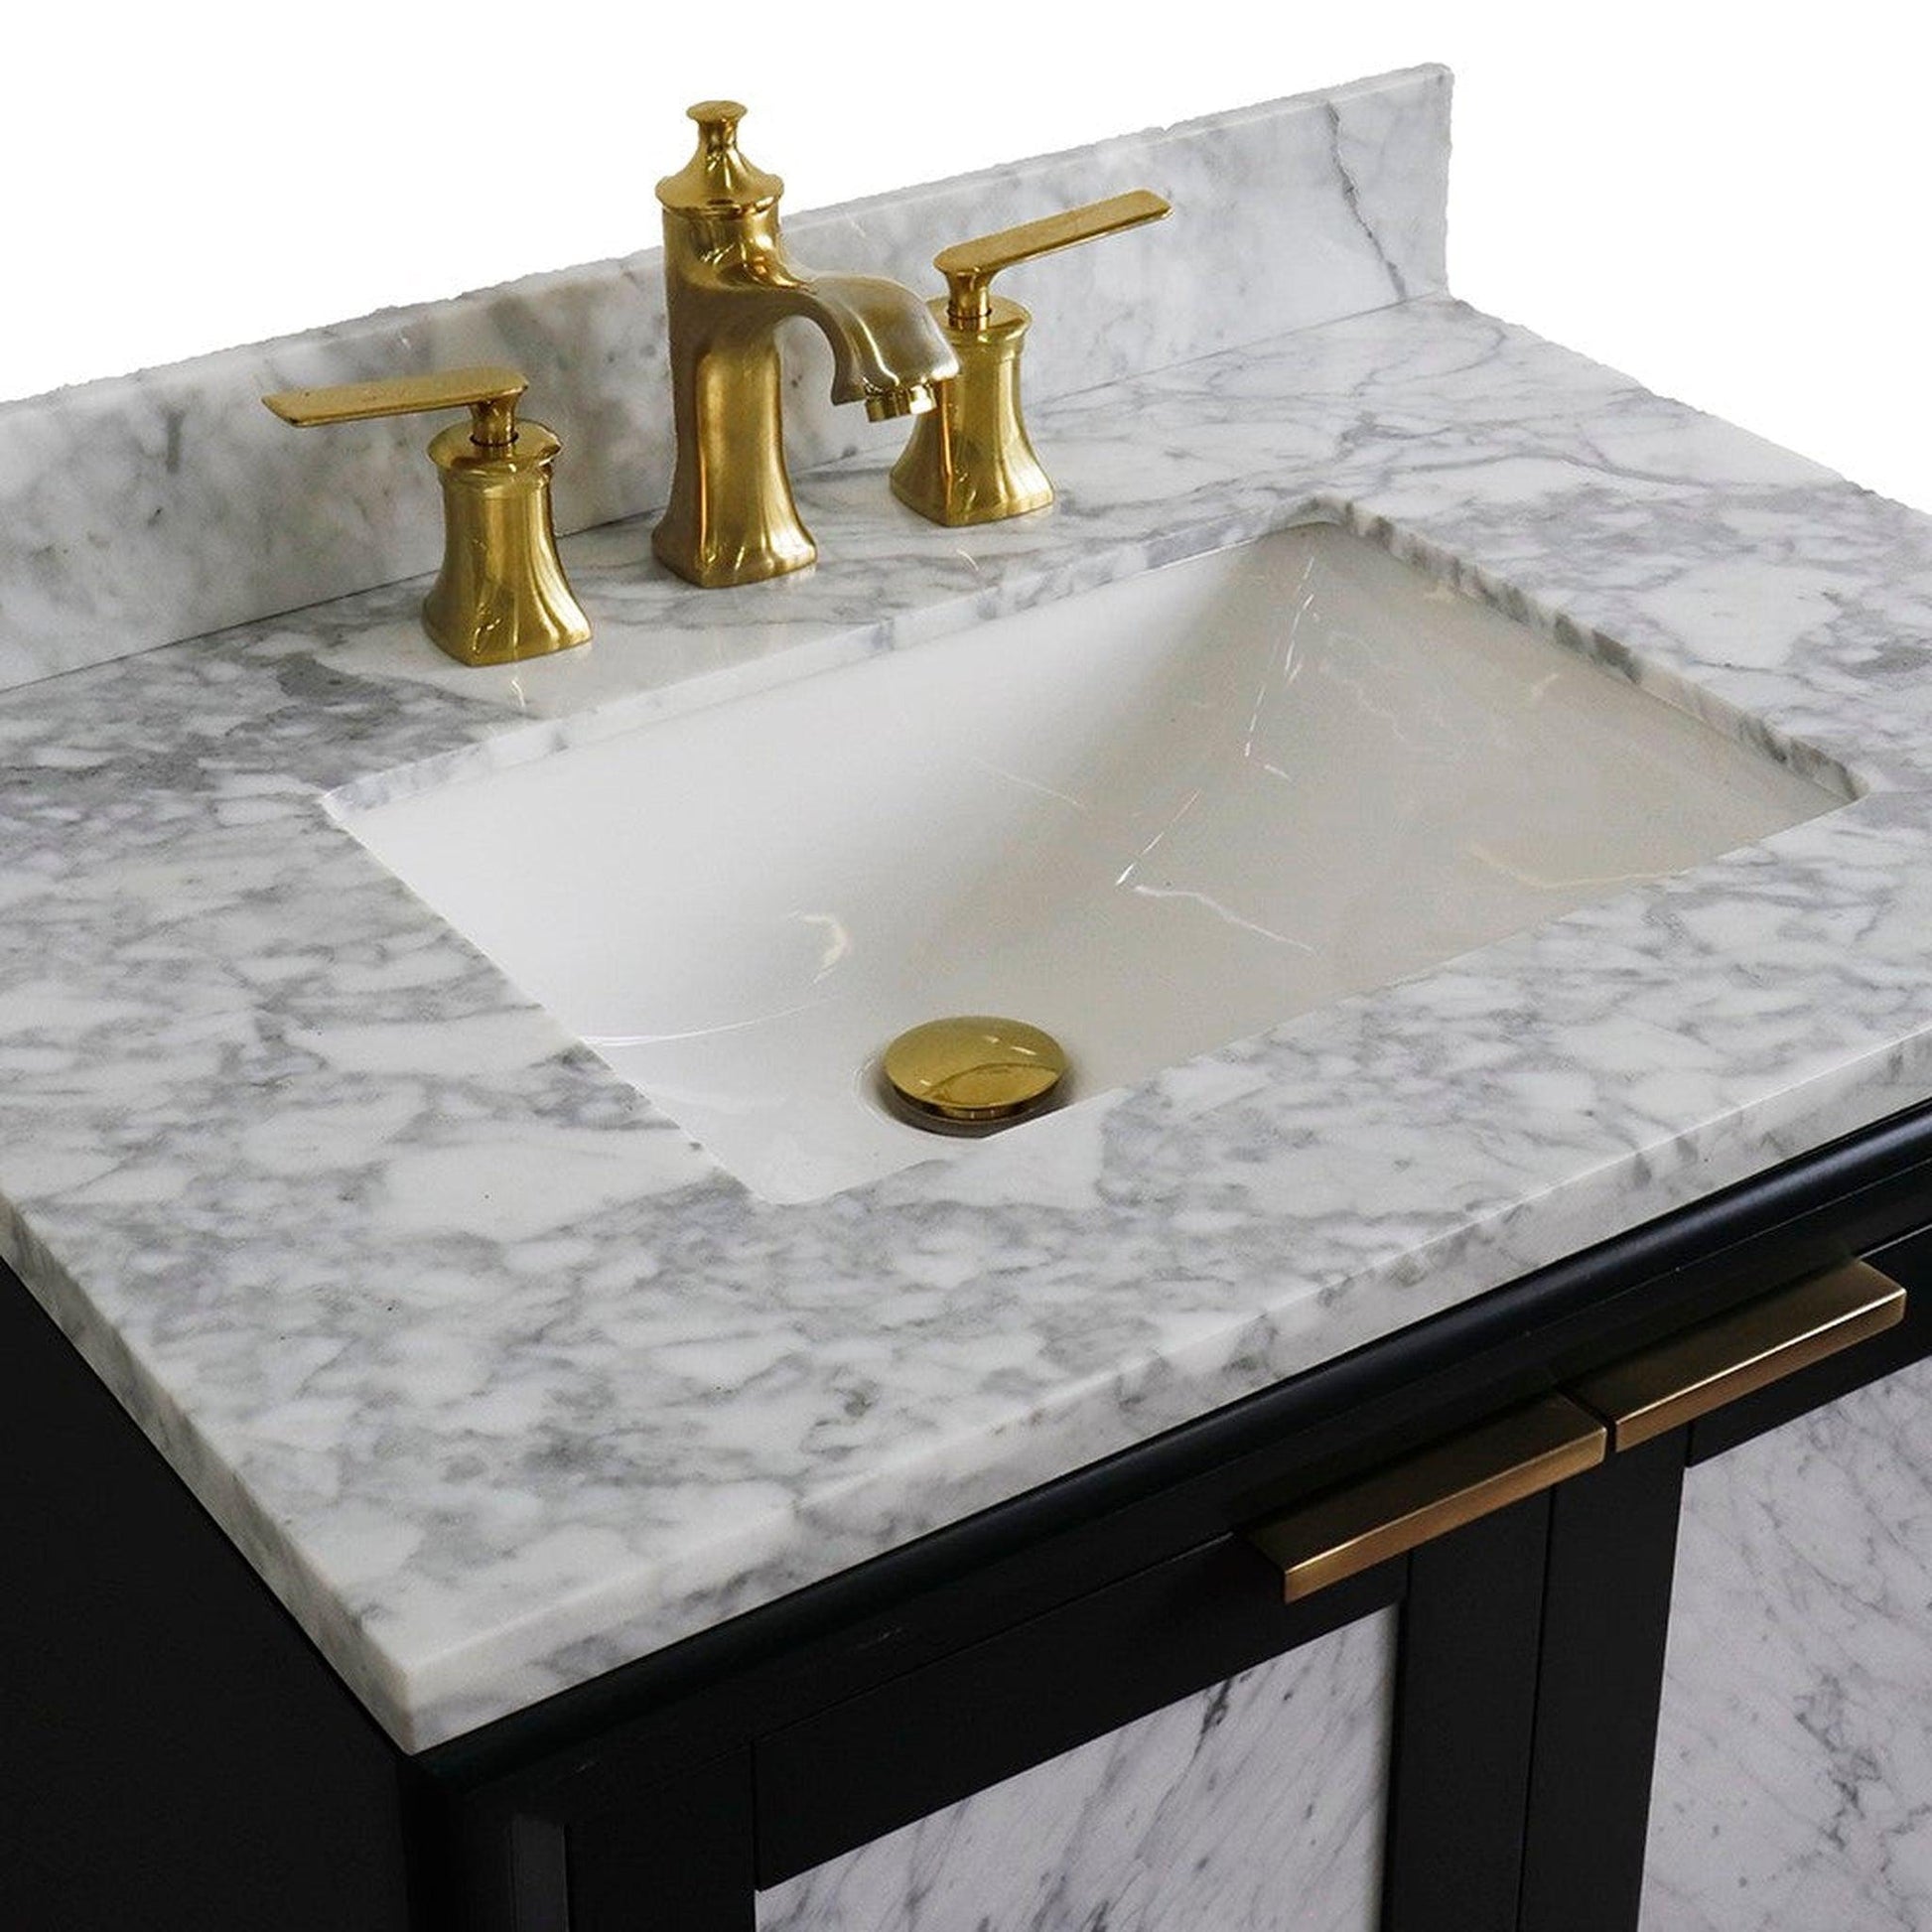 Bellaterra Home Trento 31" 2-Door 1-Drawer Dark Gray Freestanding Vanity Set With Ceramic Undermount Rectangular Sink and White Carrara Marble Top